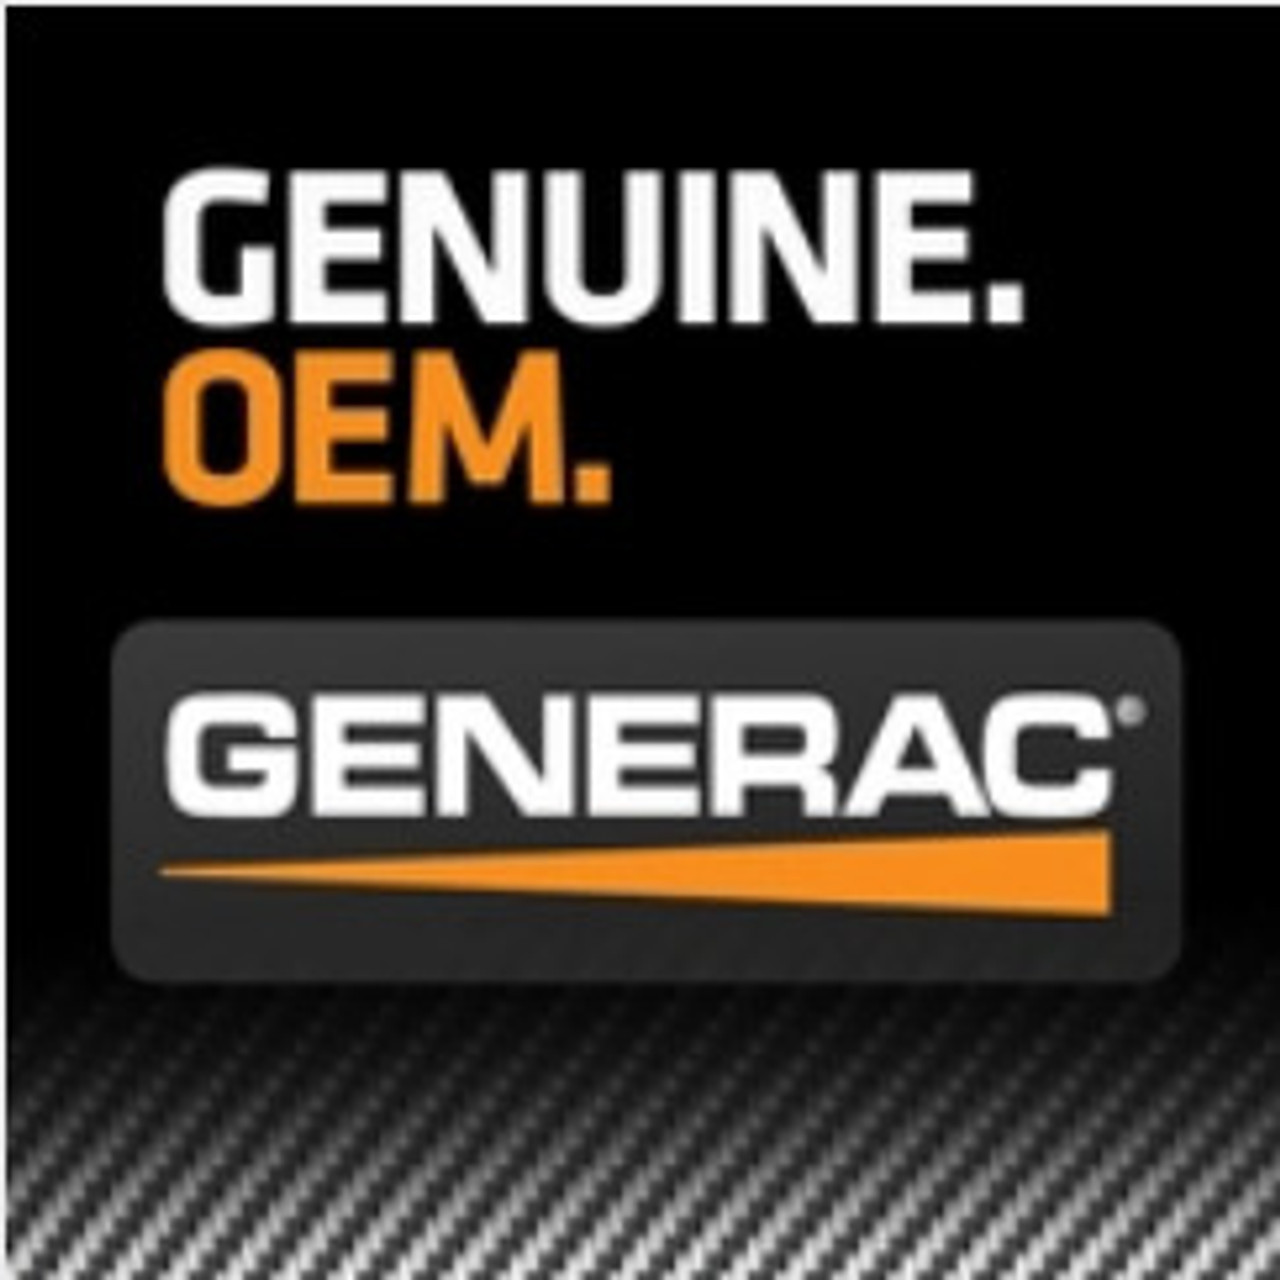 Black and Orange Generac Logo for Genuine OEM Generator Parts